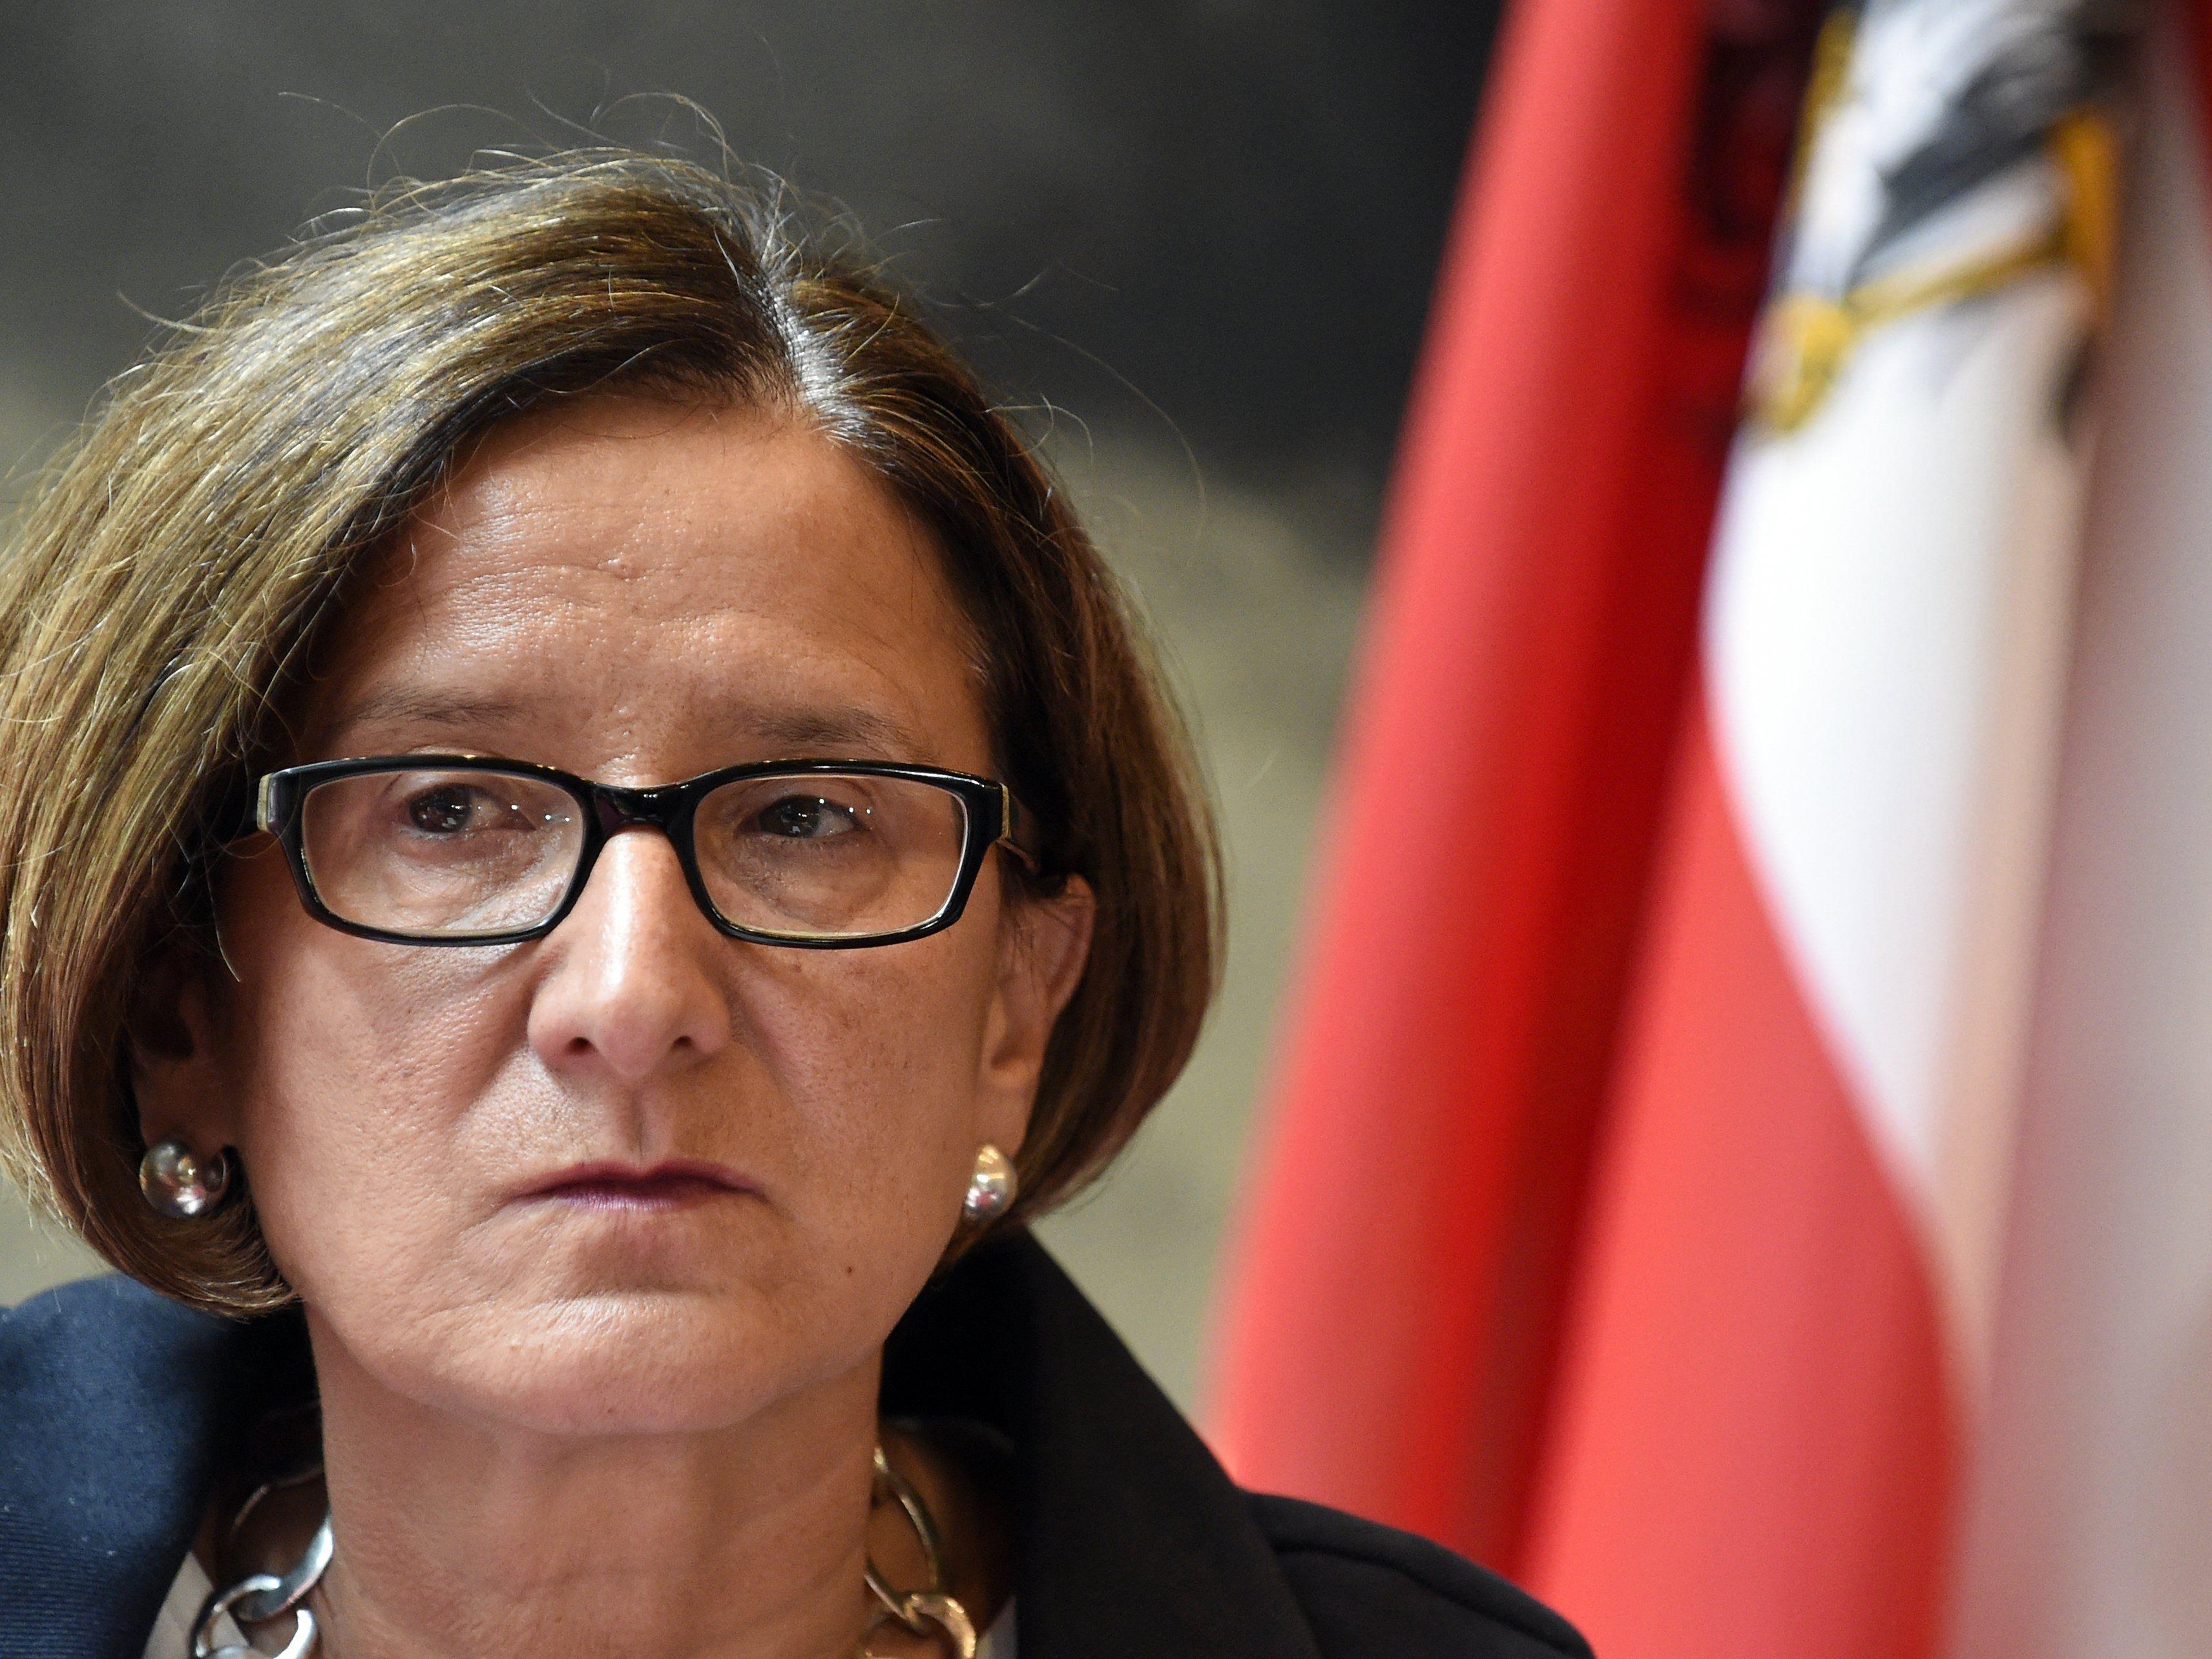 nenministerin Johanna Mikl-Leitner wird in Sachen Asyl heftig kritisiert